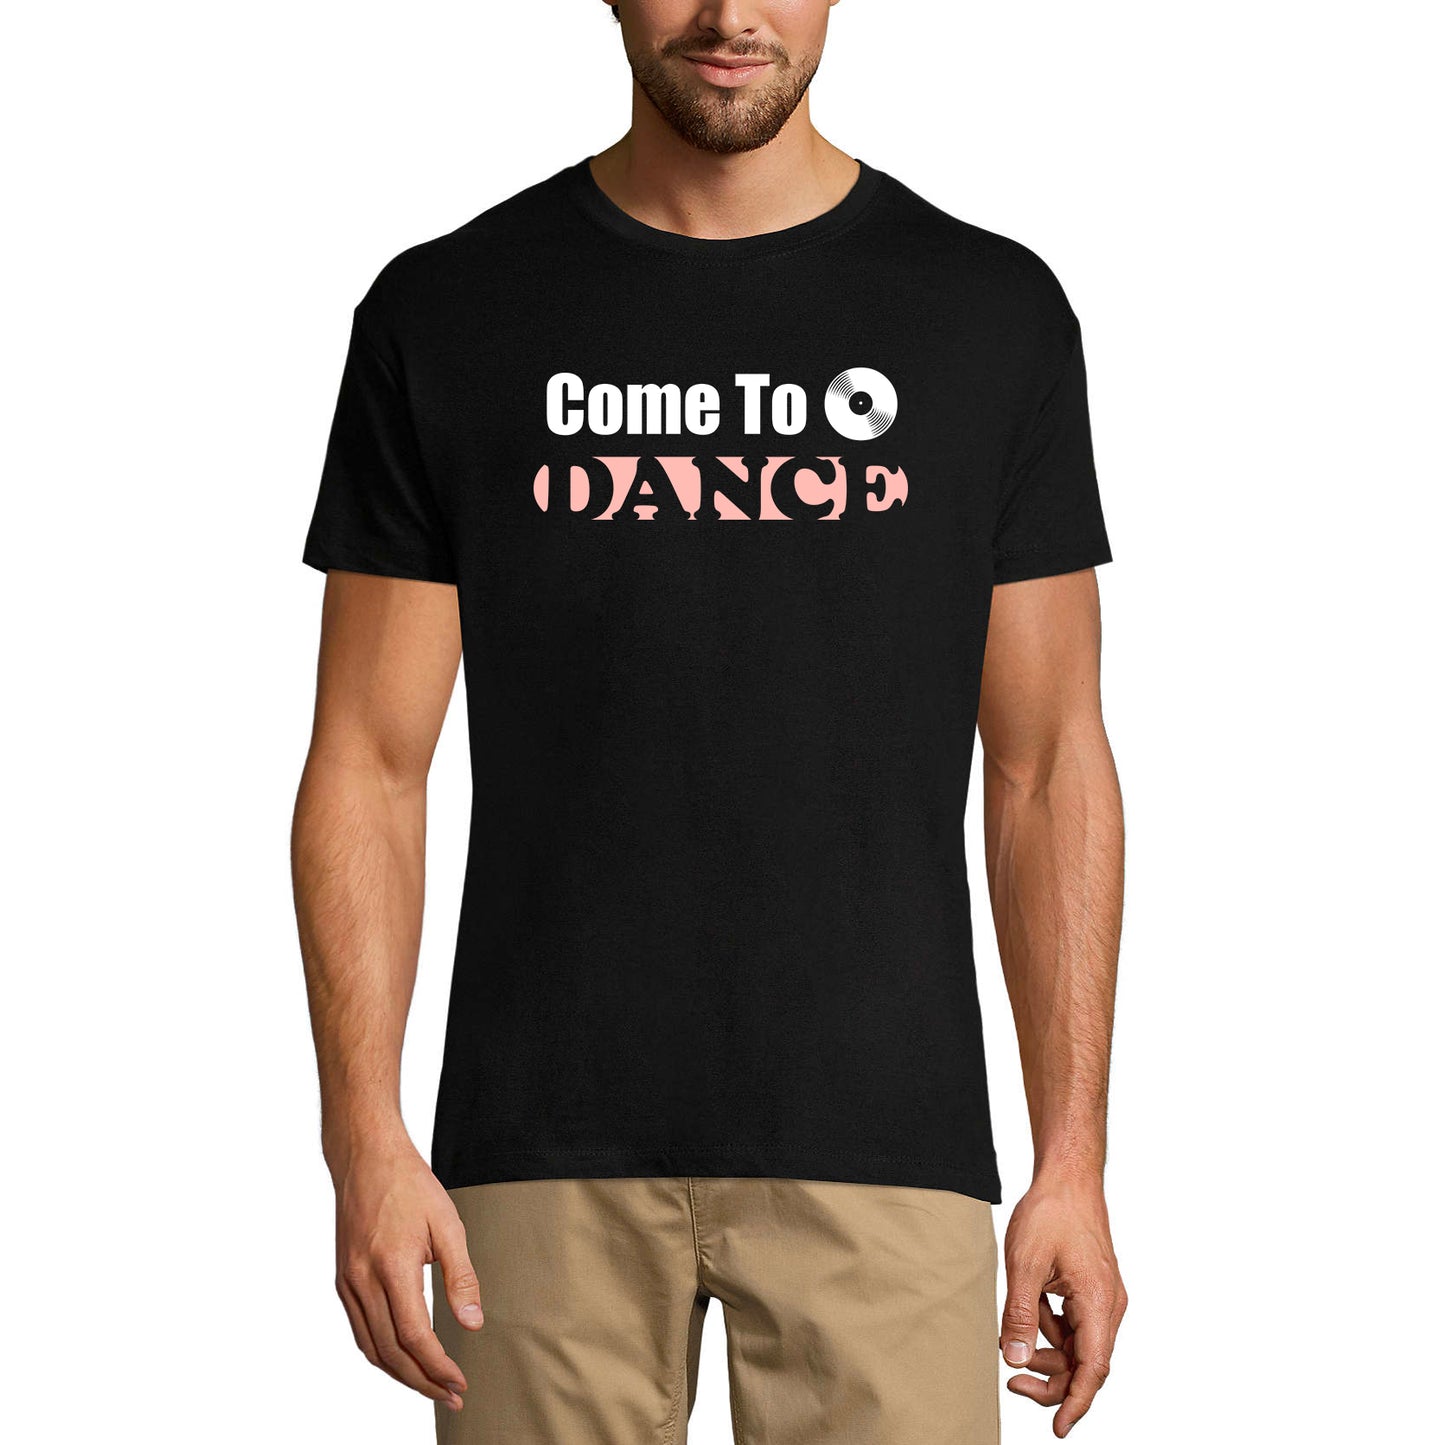 ULTRABASIC Men's Graphic T-Shirt Come to Dance - Music Dancing Shirt for Men